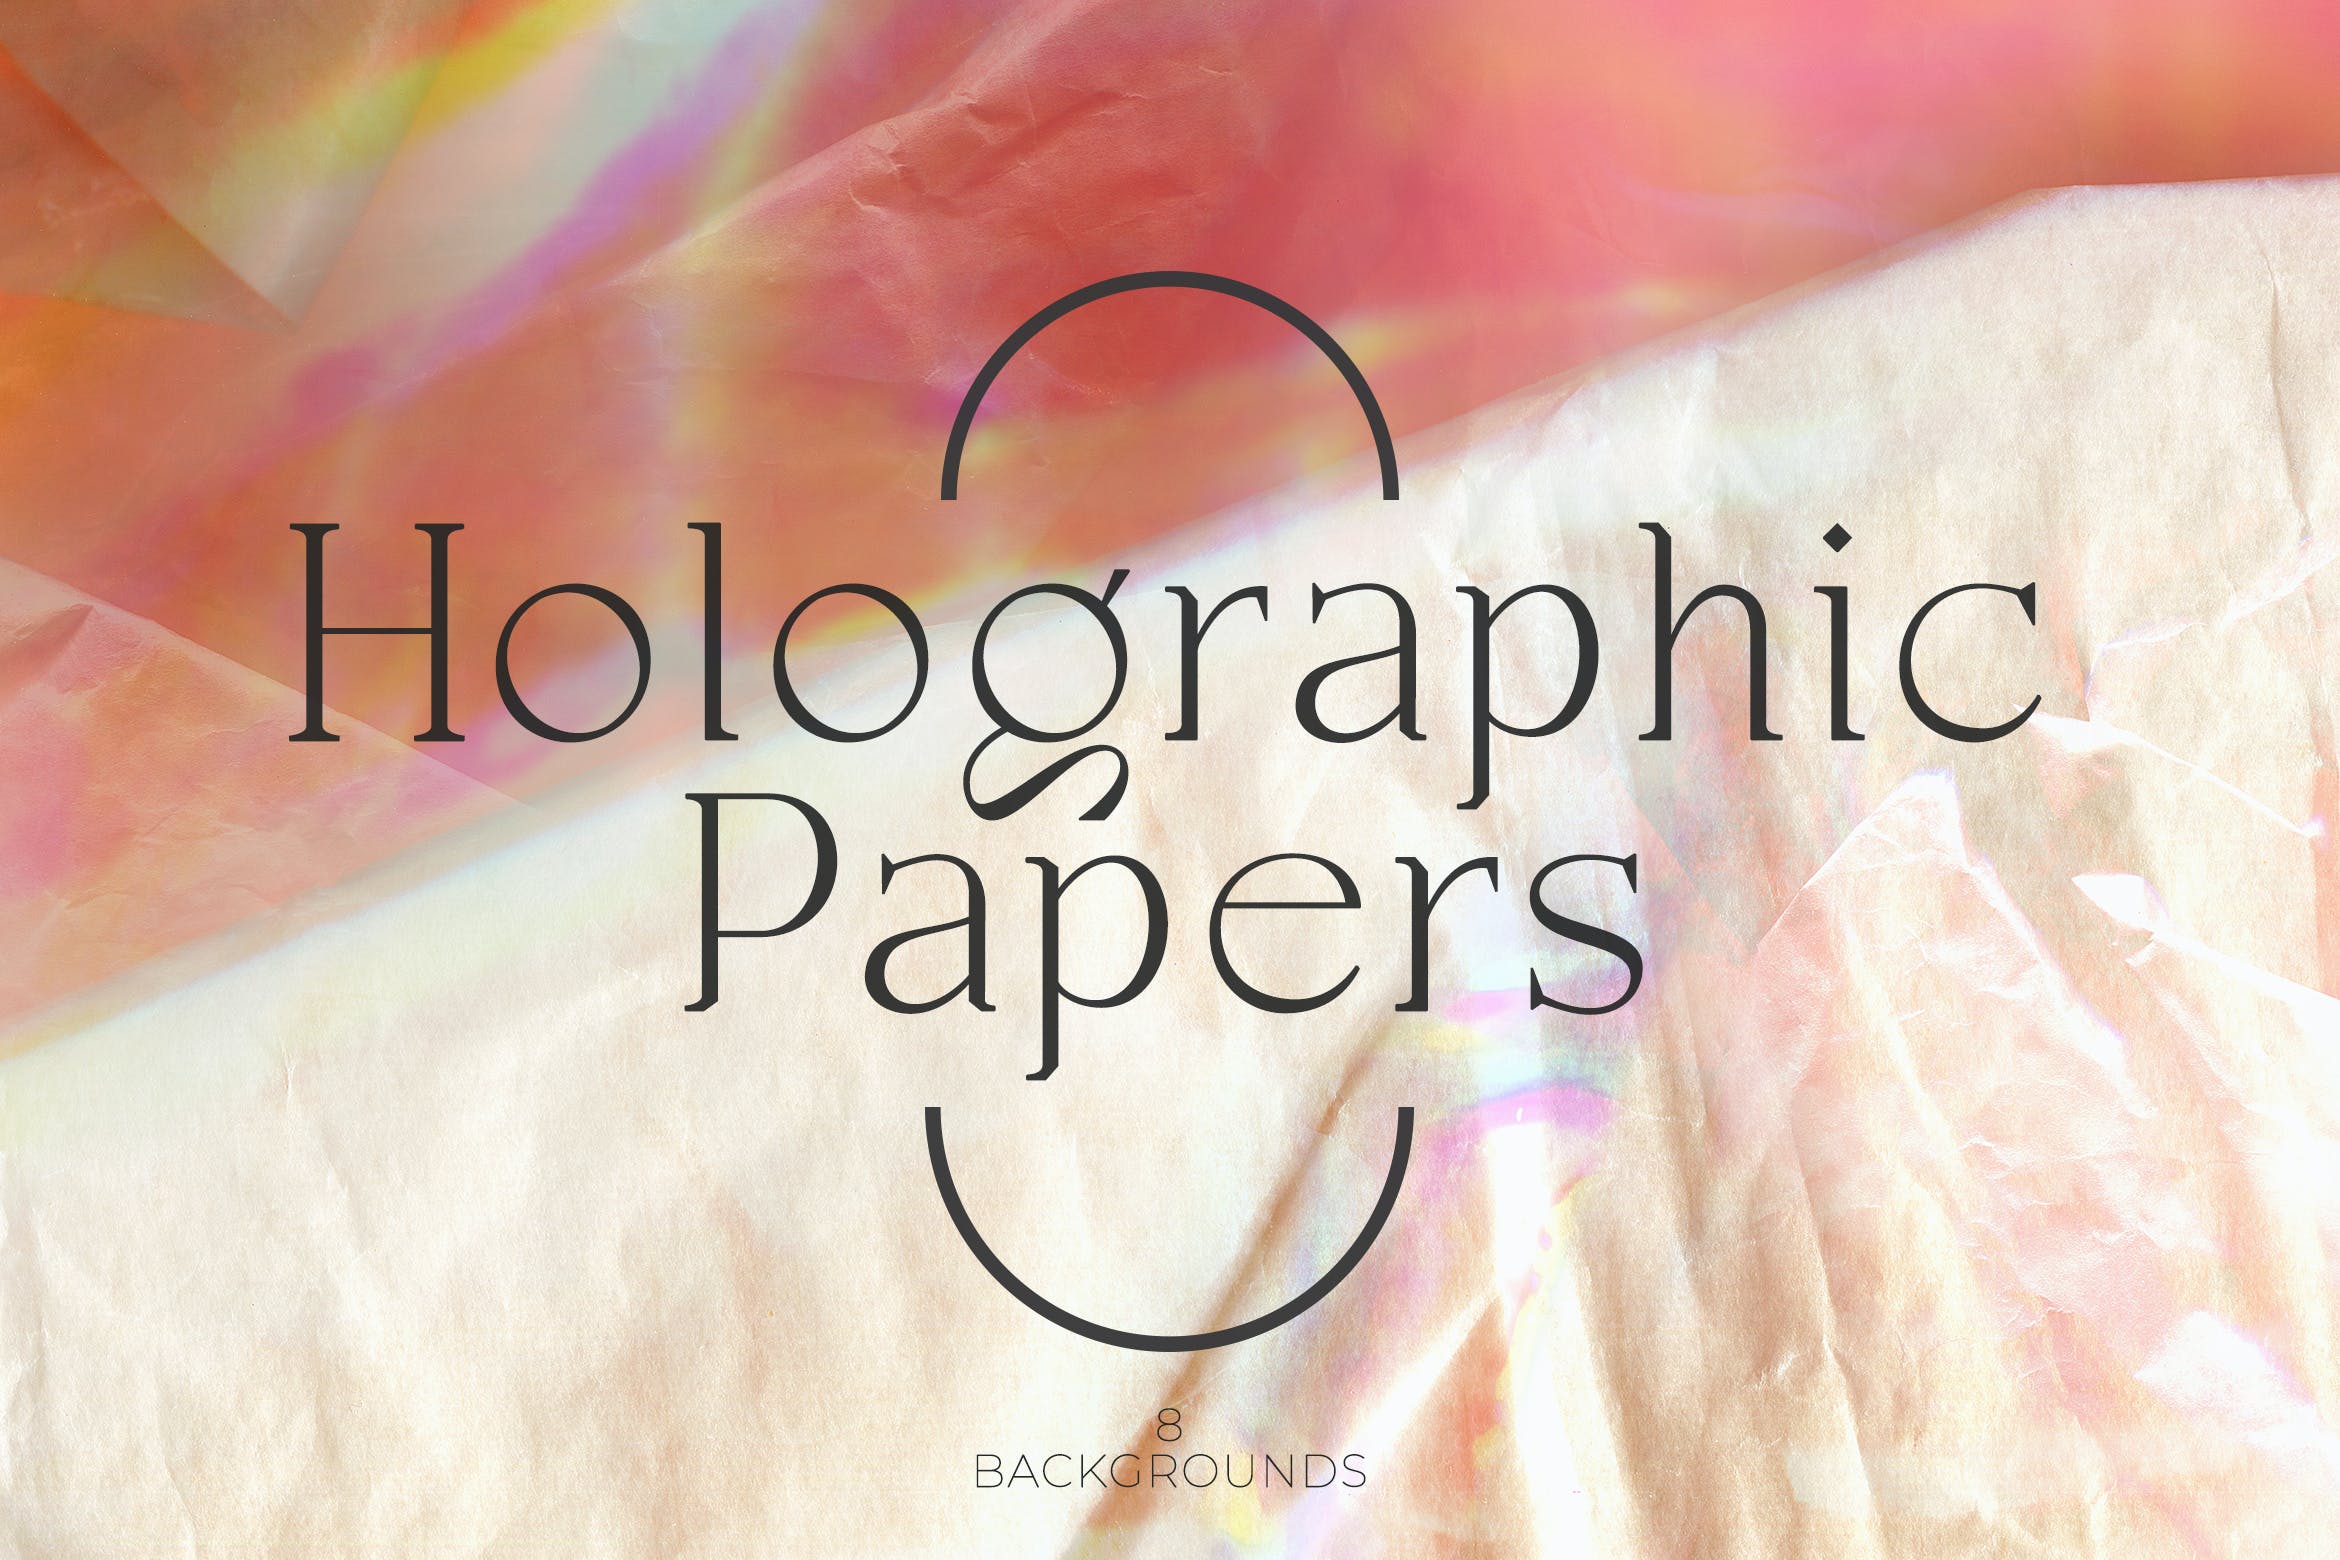 抽象全息纸张背景 Holographic Papers 图片素材 第1张